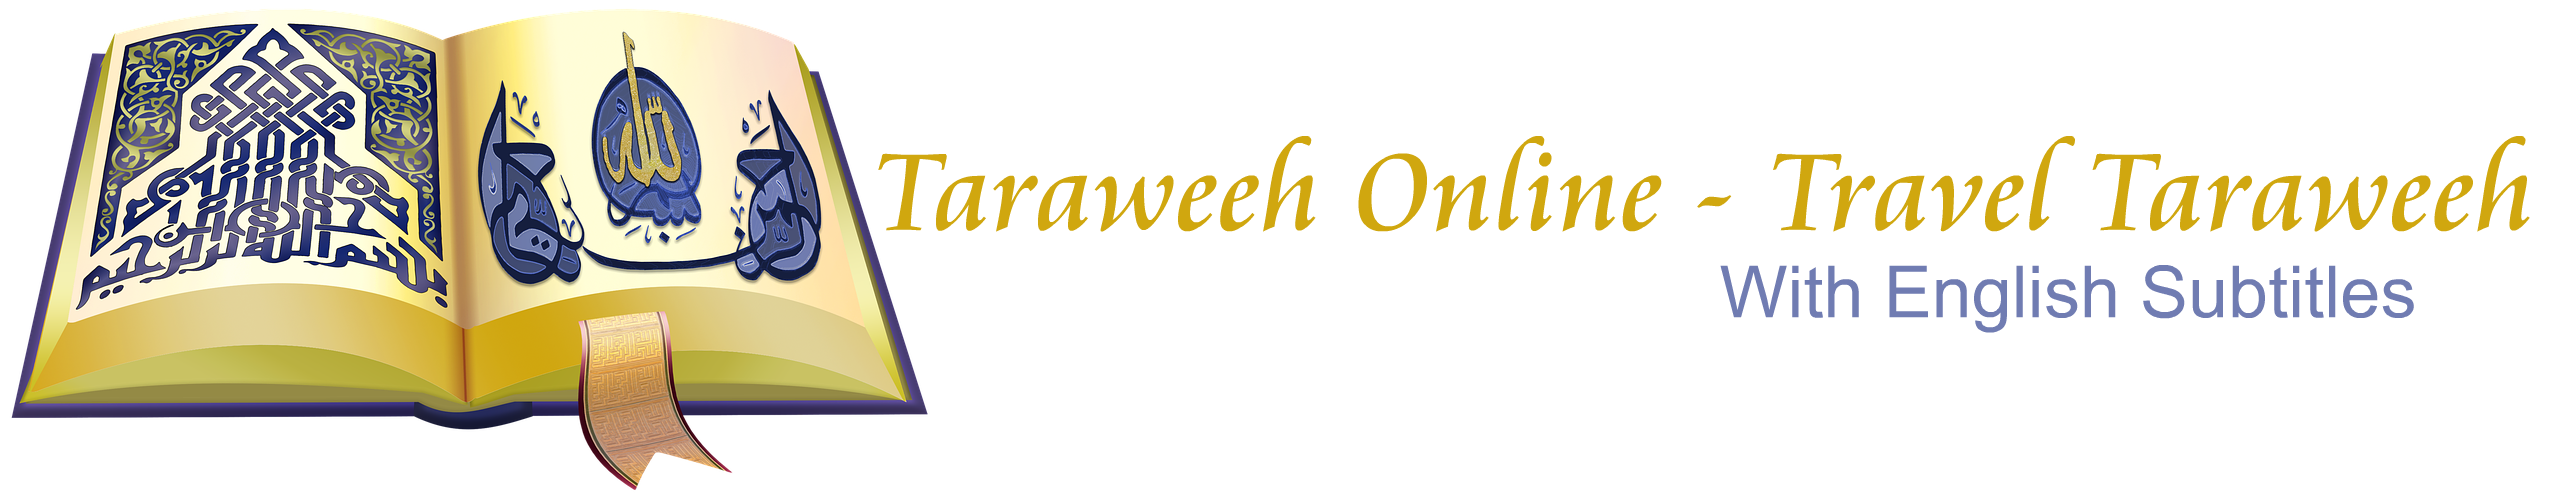 Travel Taraweeh